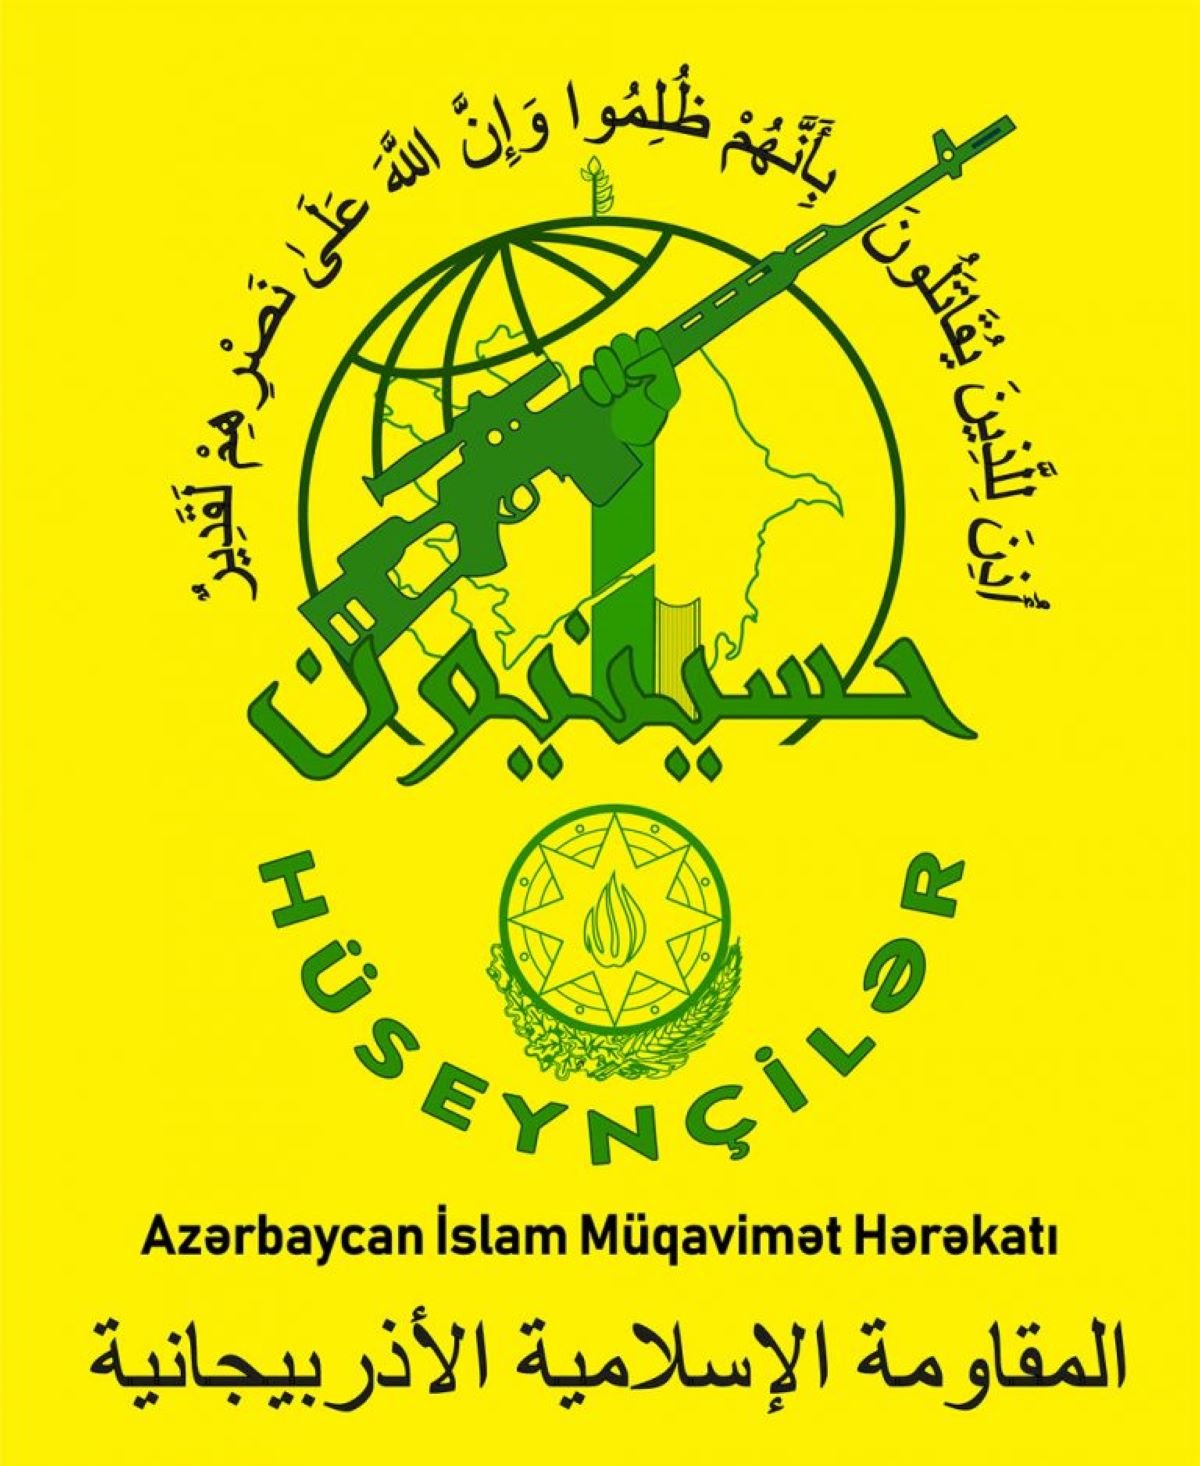 Axis, of, Resistance, group, Huseyniyoun, Azerbaijan